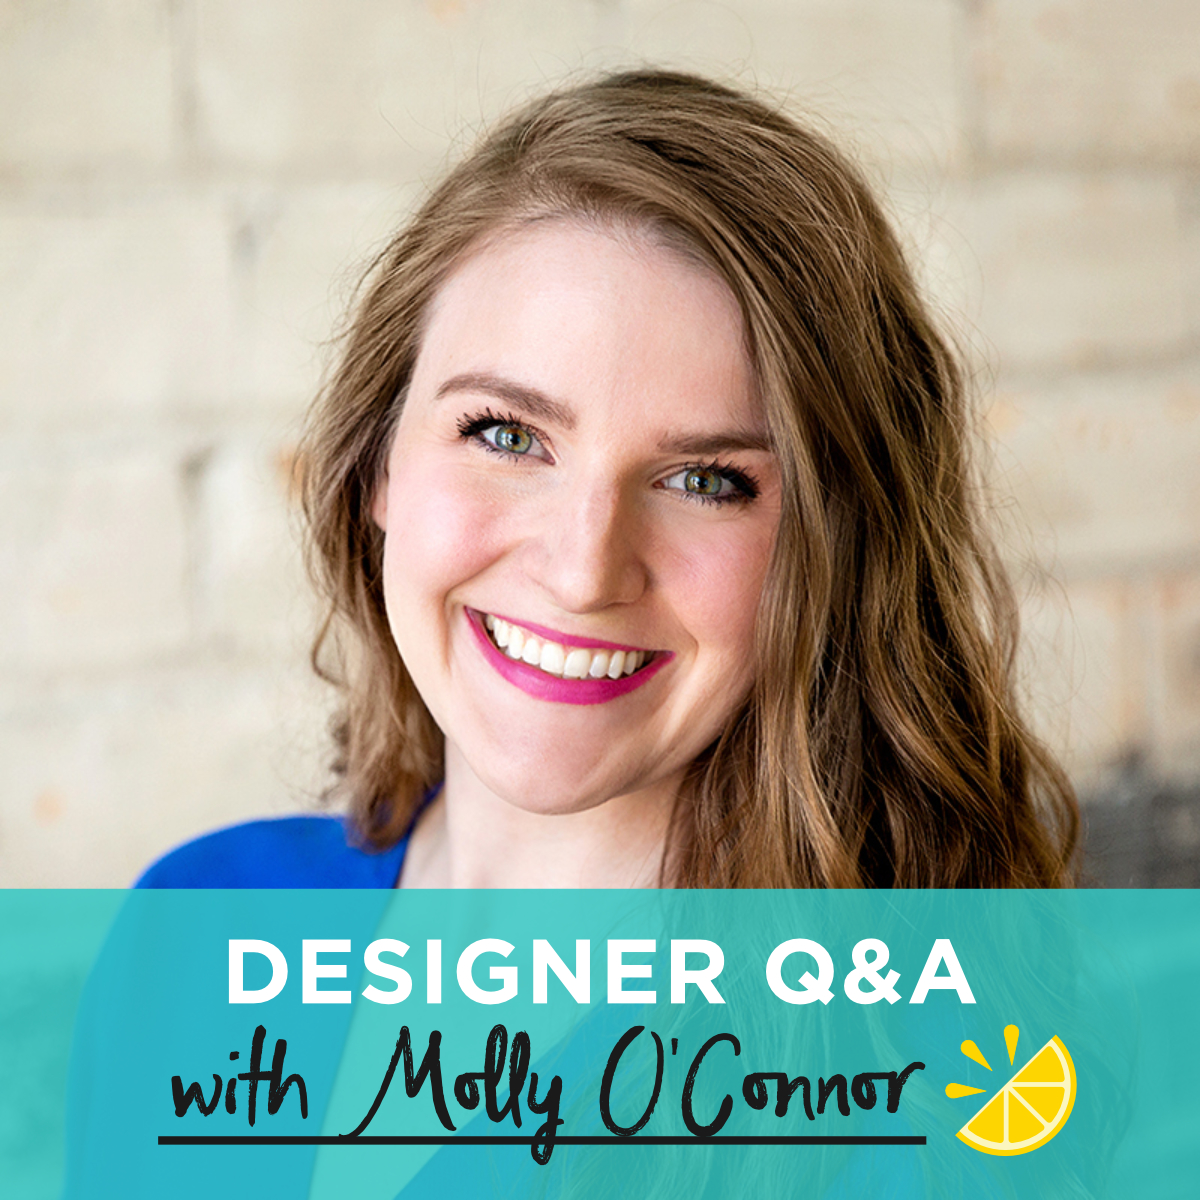 Designer Q&A with Molly O'Connor